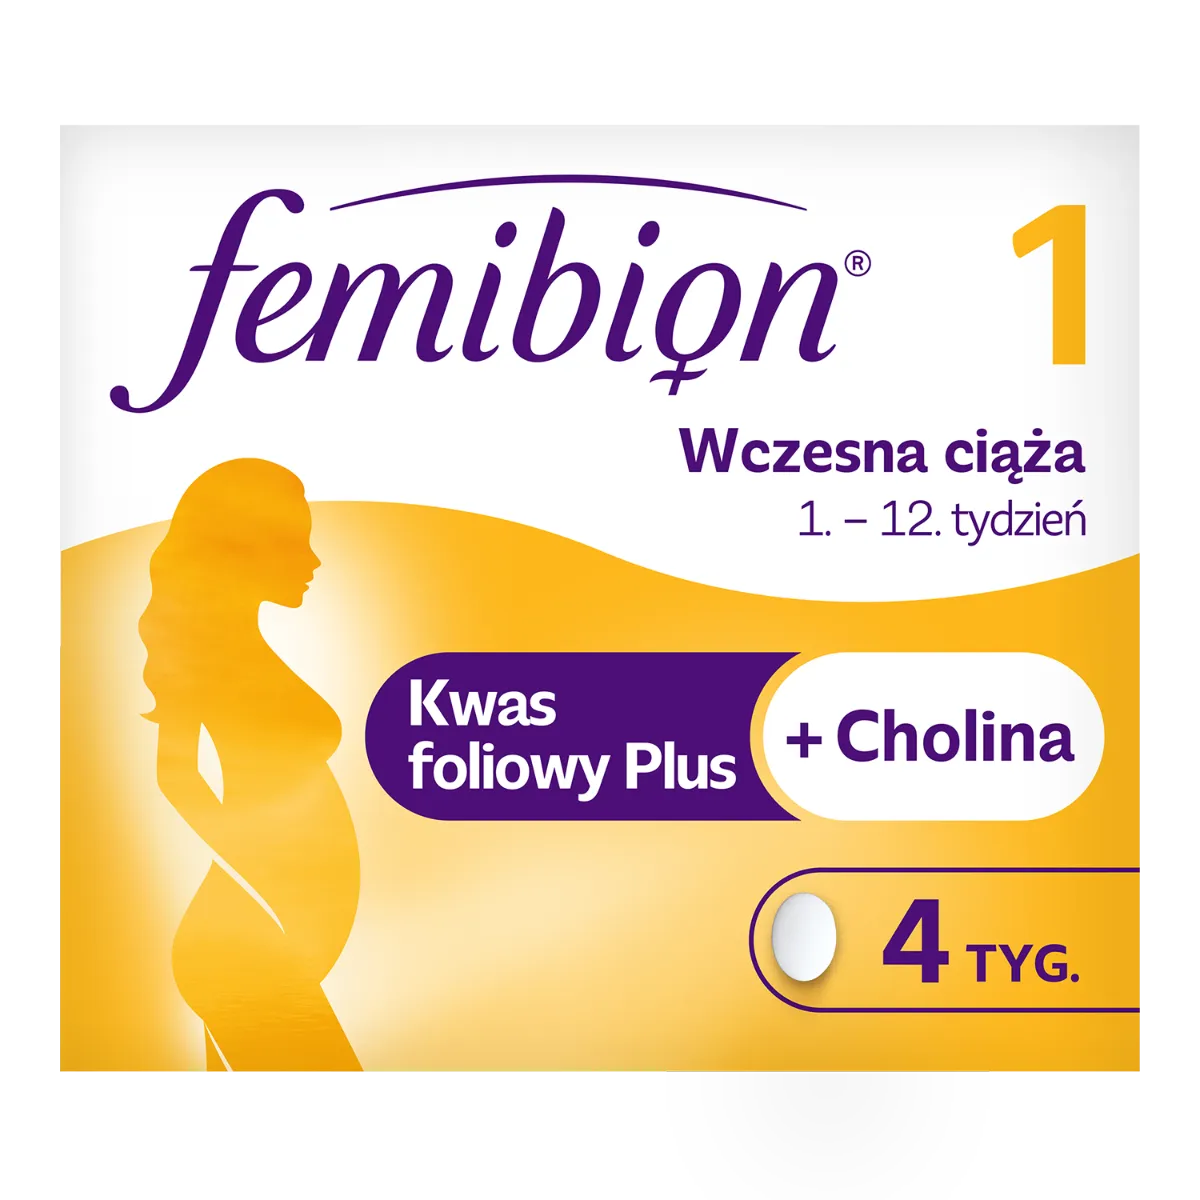 Femibion 1 Wczesna ciąża, suplement diety, 28 tabletek